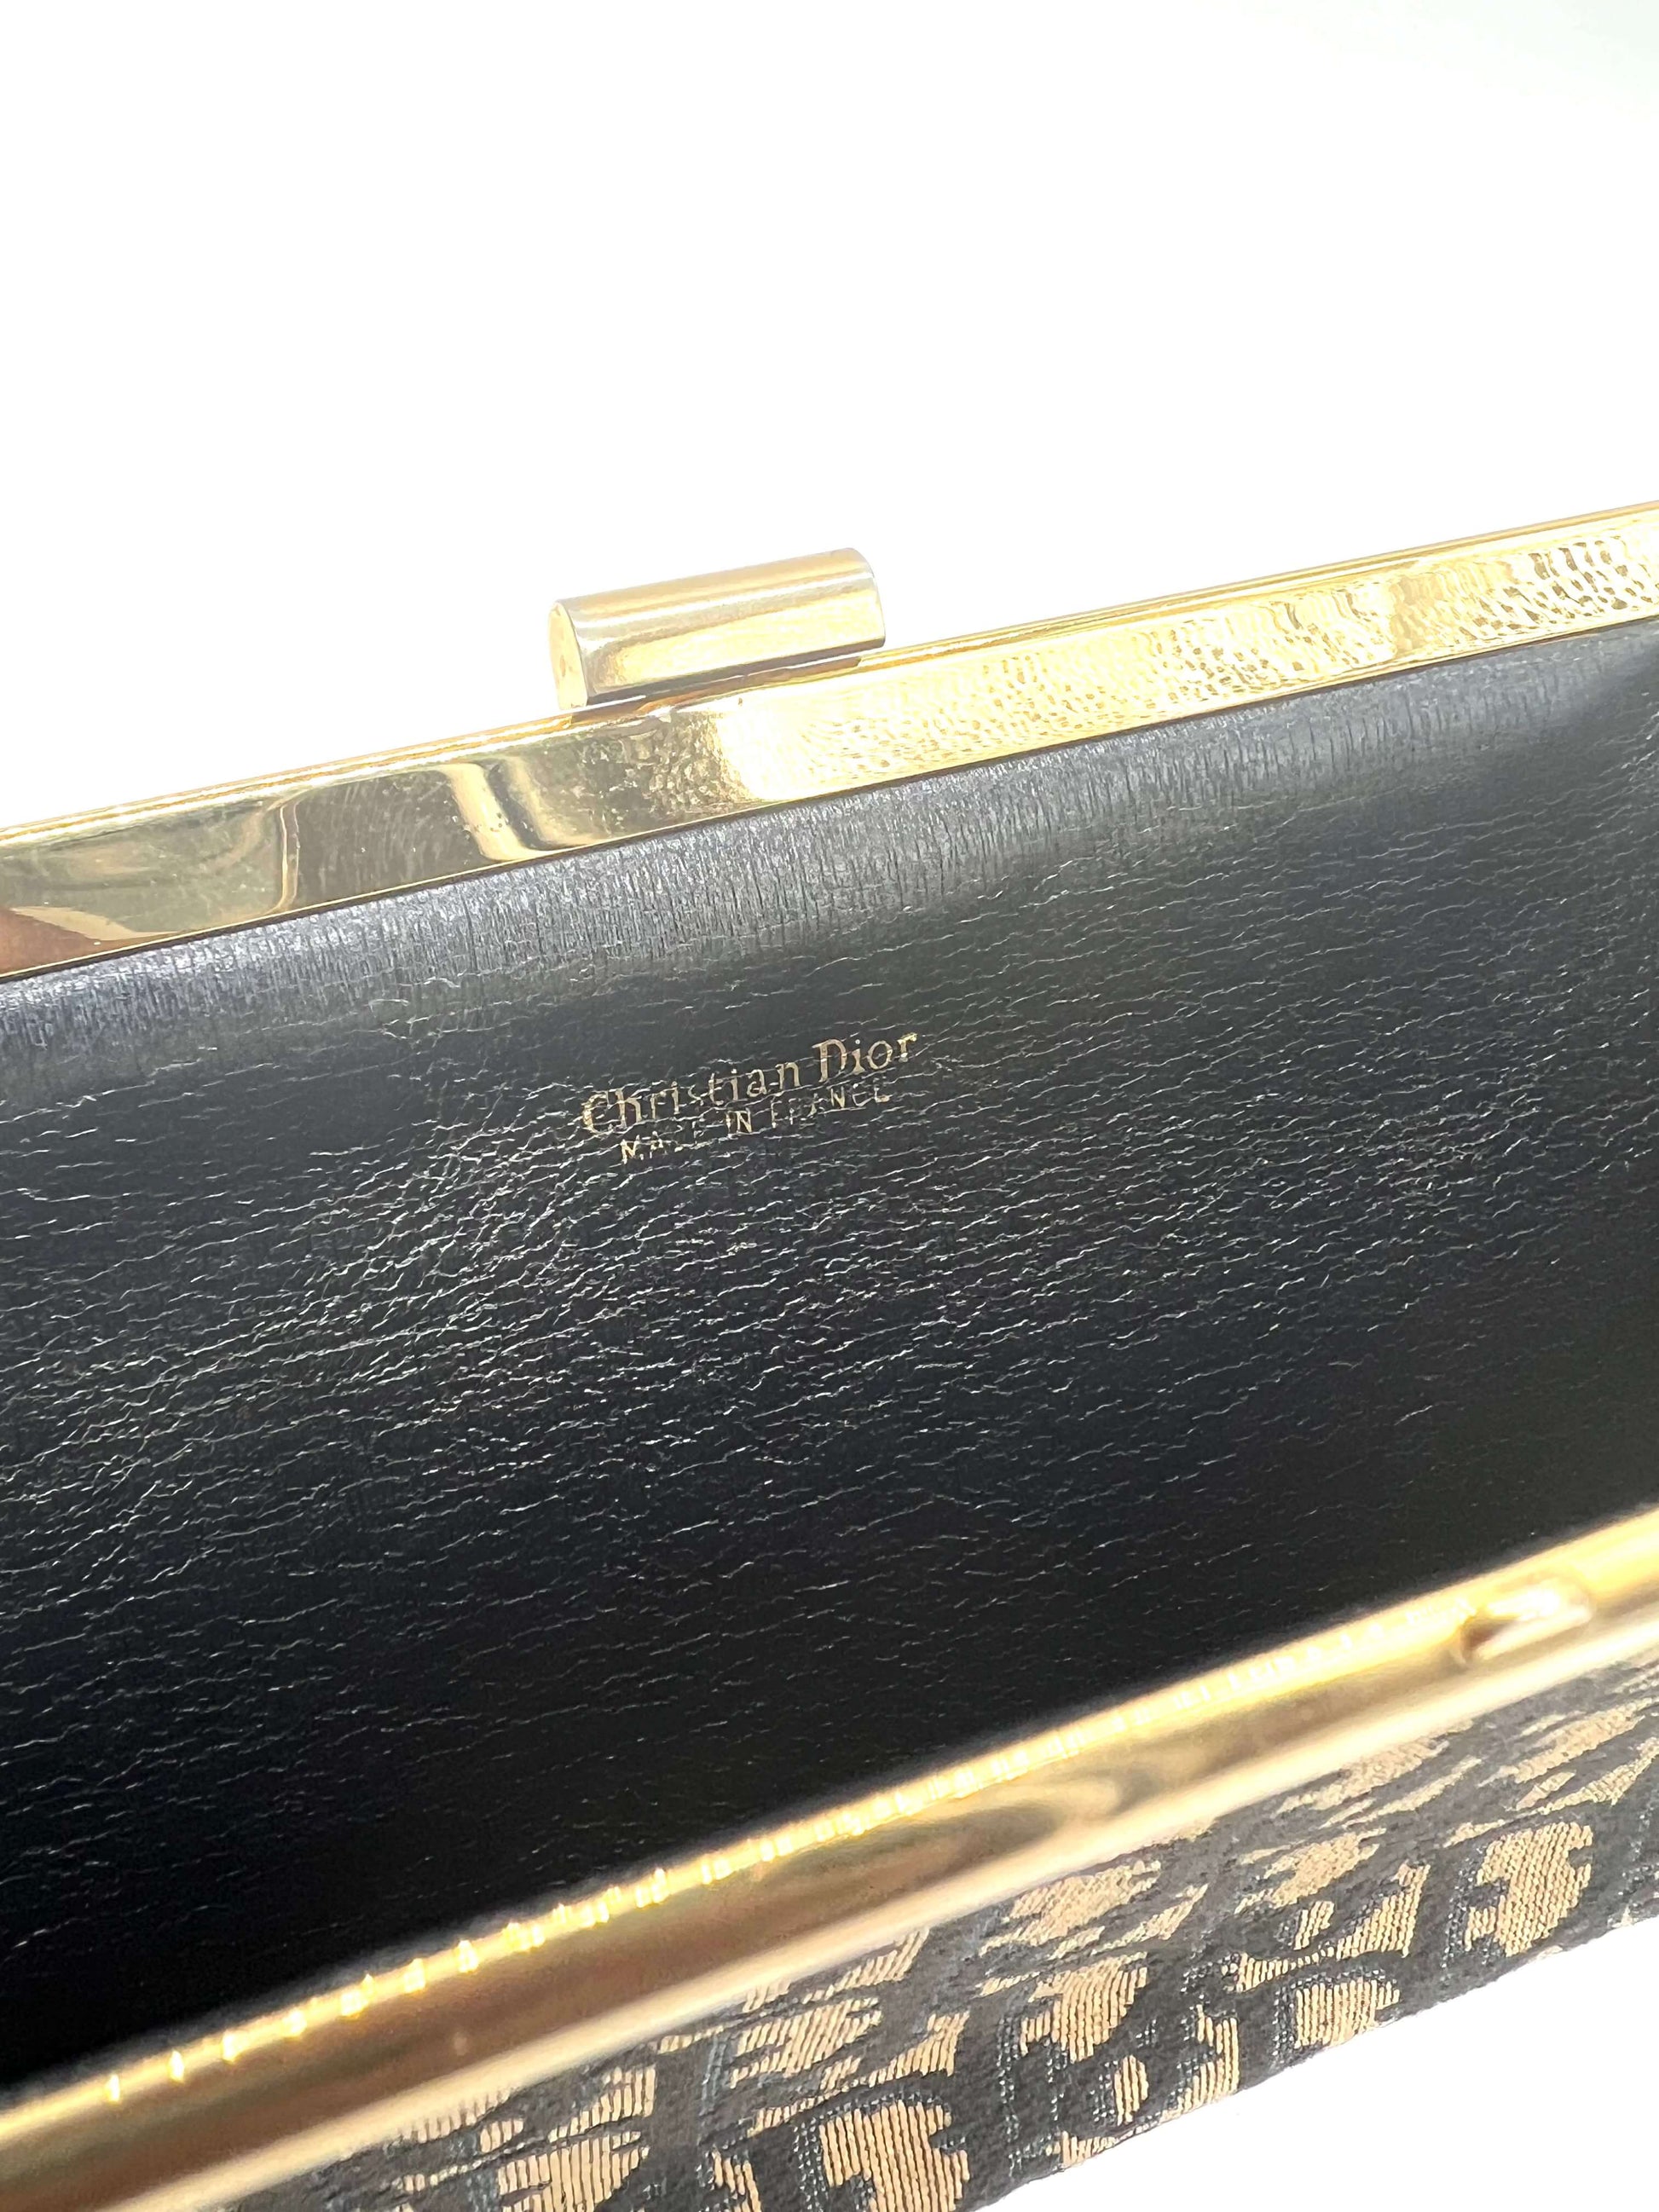 Christian Dior vintage Navy clutch bag chrome late 60s - 70s - Katheley's